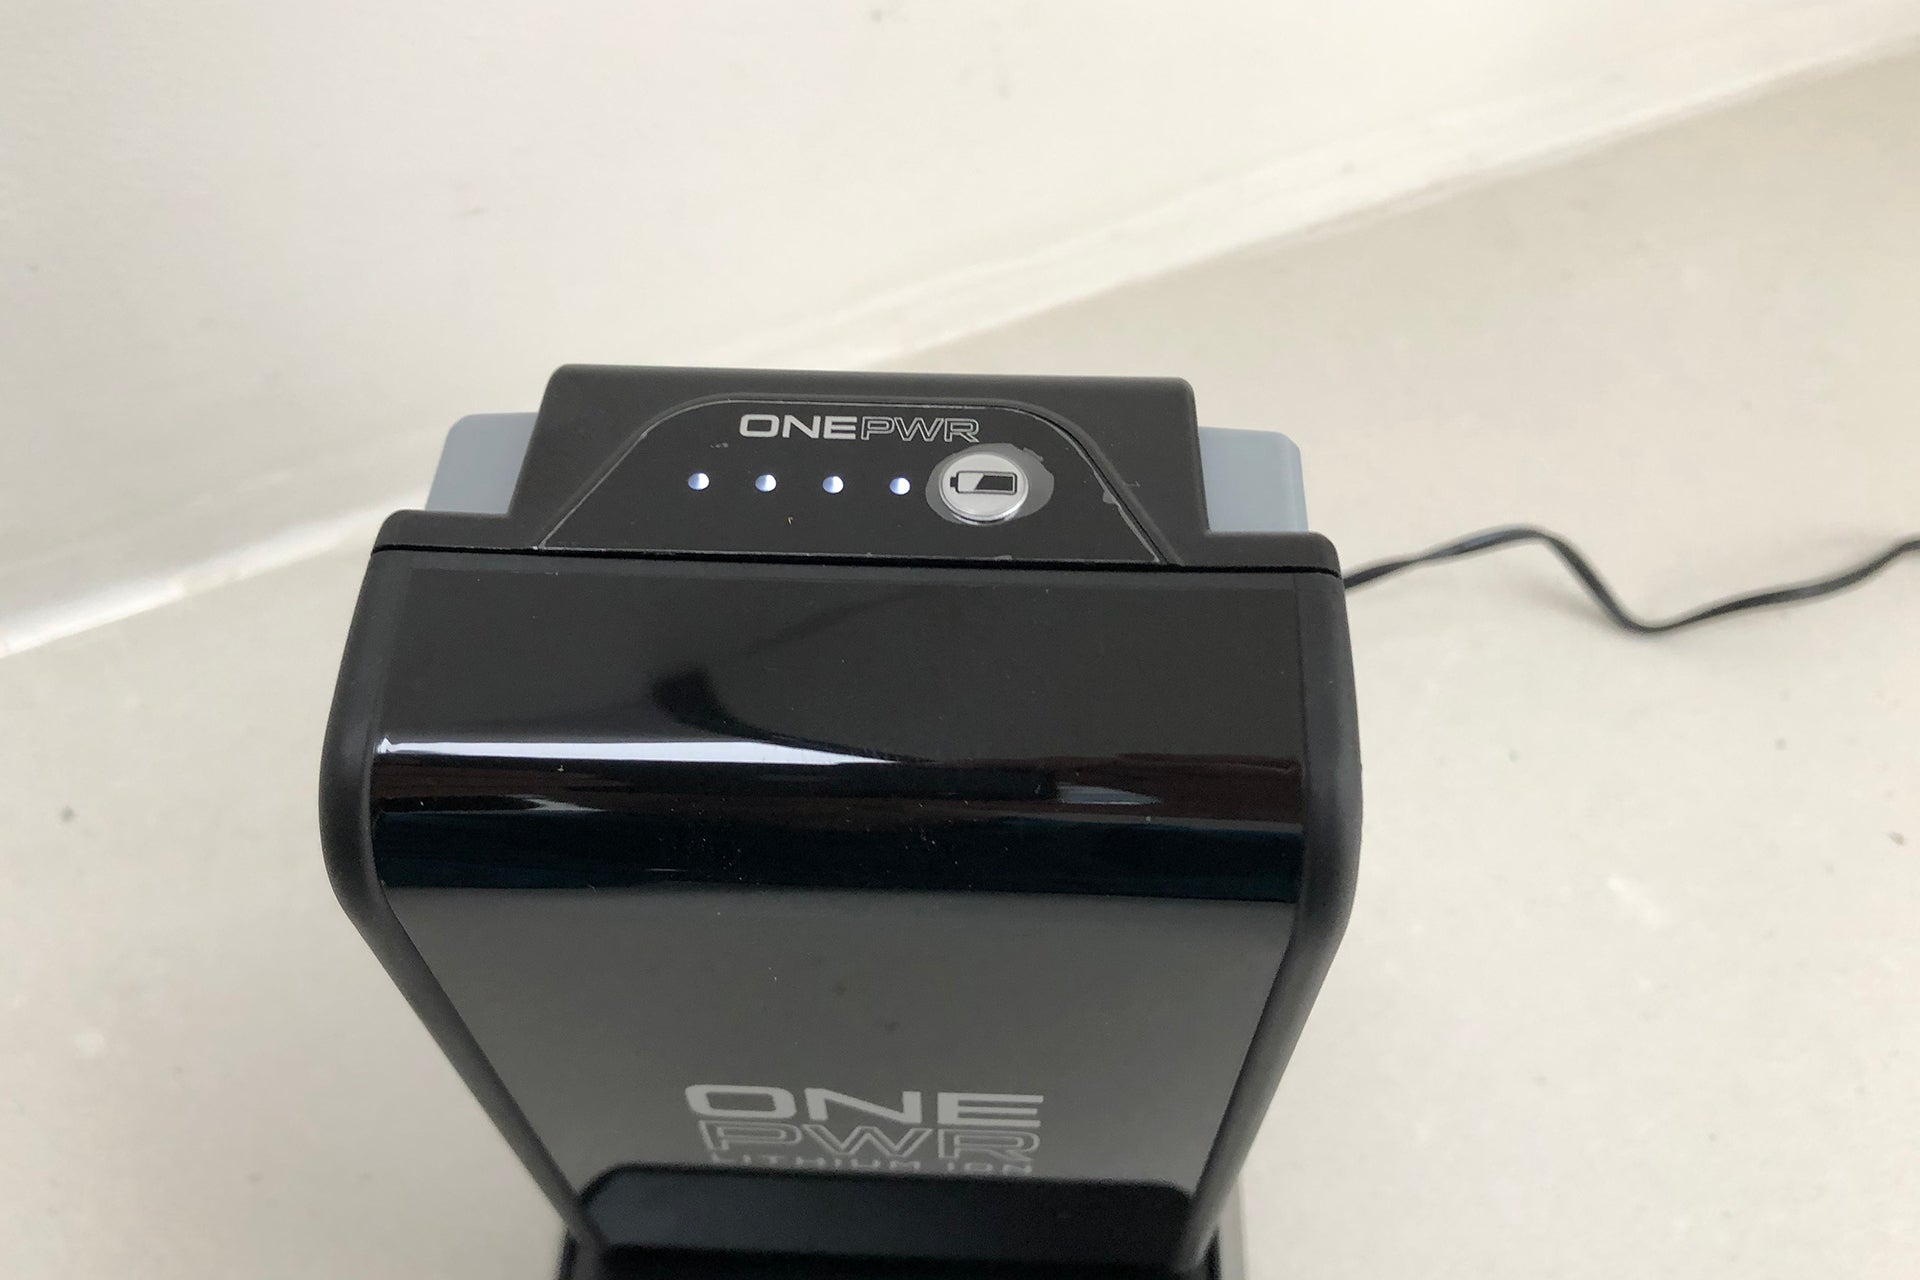 Vax ONEPWR Spotless Go battery power meter